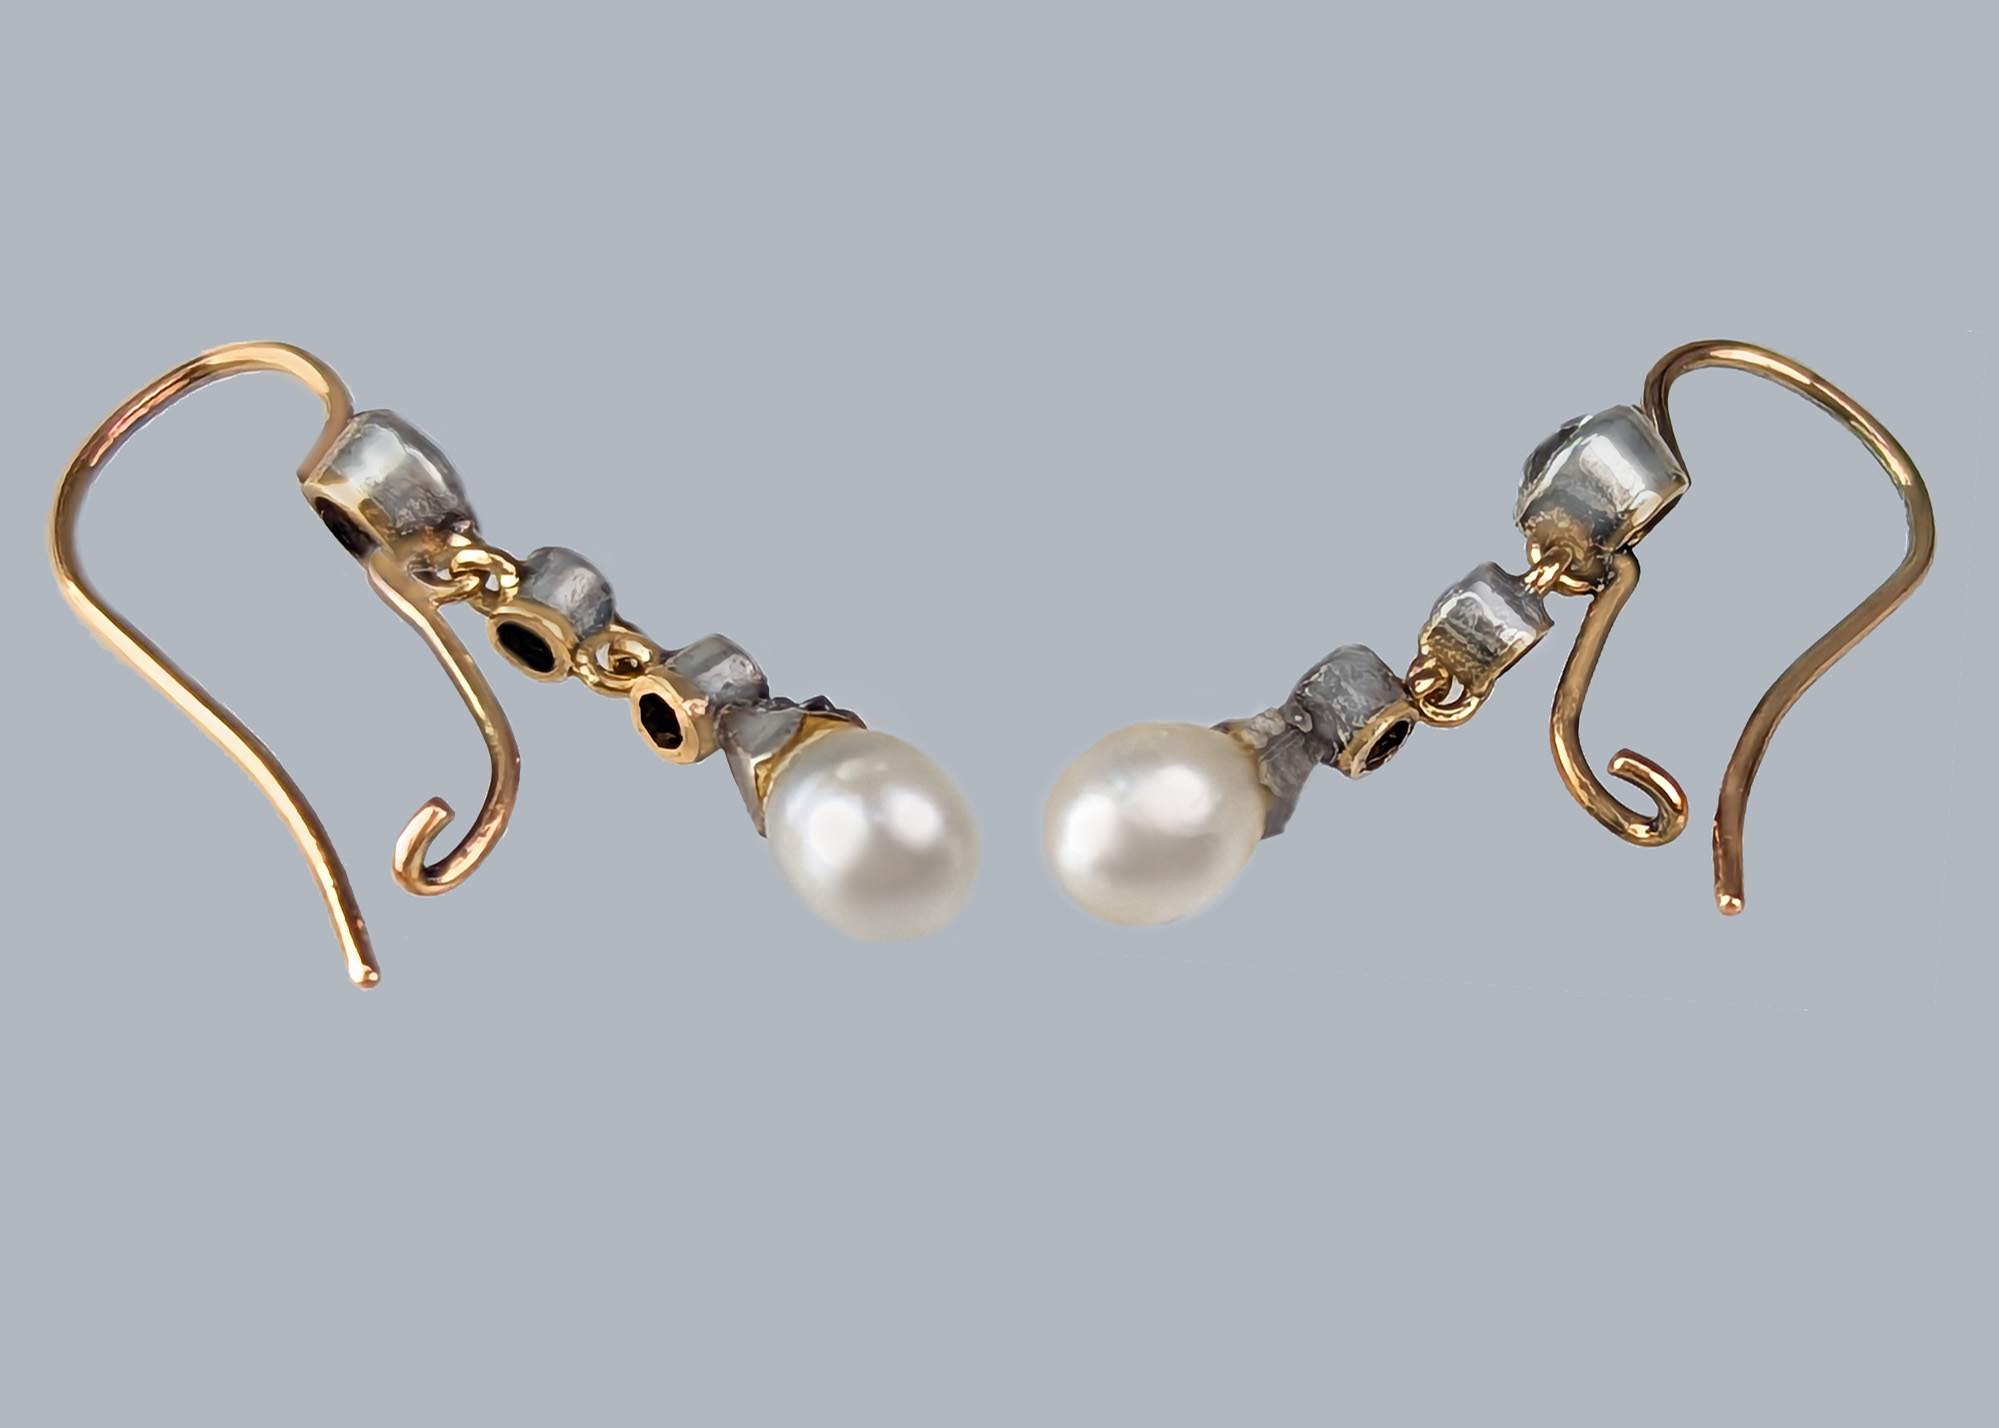 Edwardian natural pearl earrings